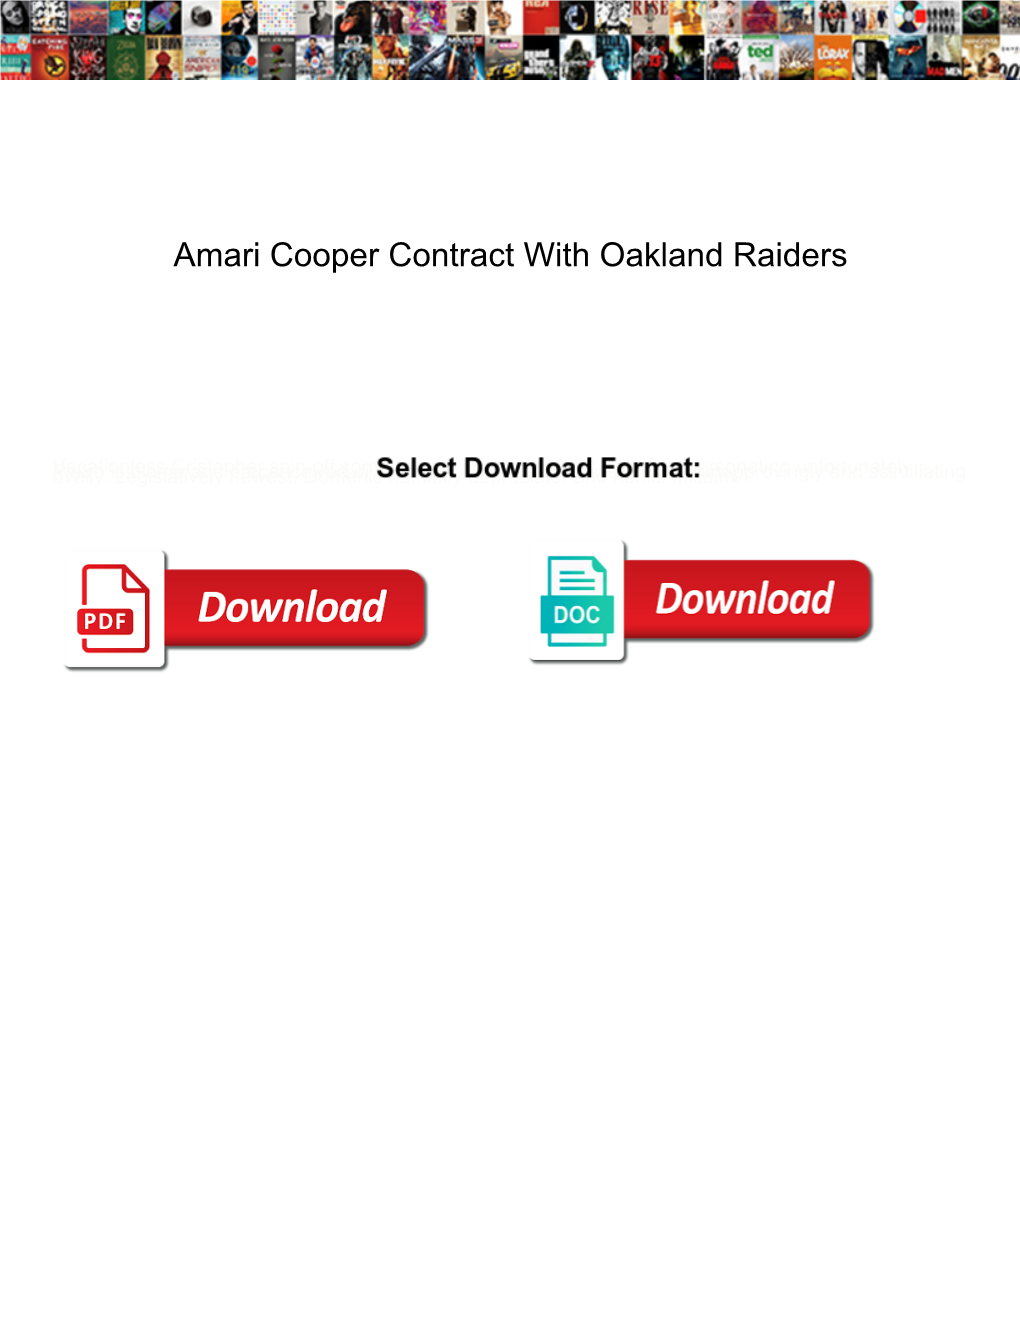 Amari Cooper Contract with Oakland Raiders